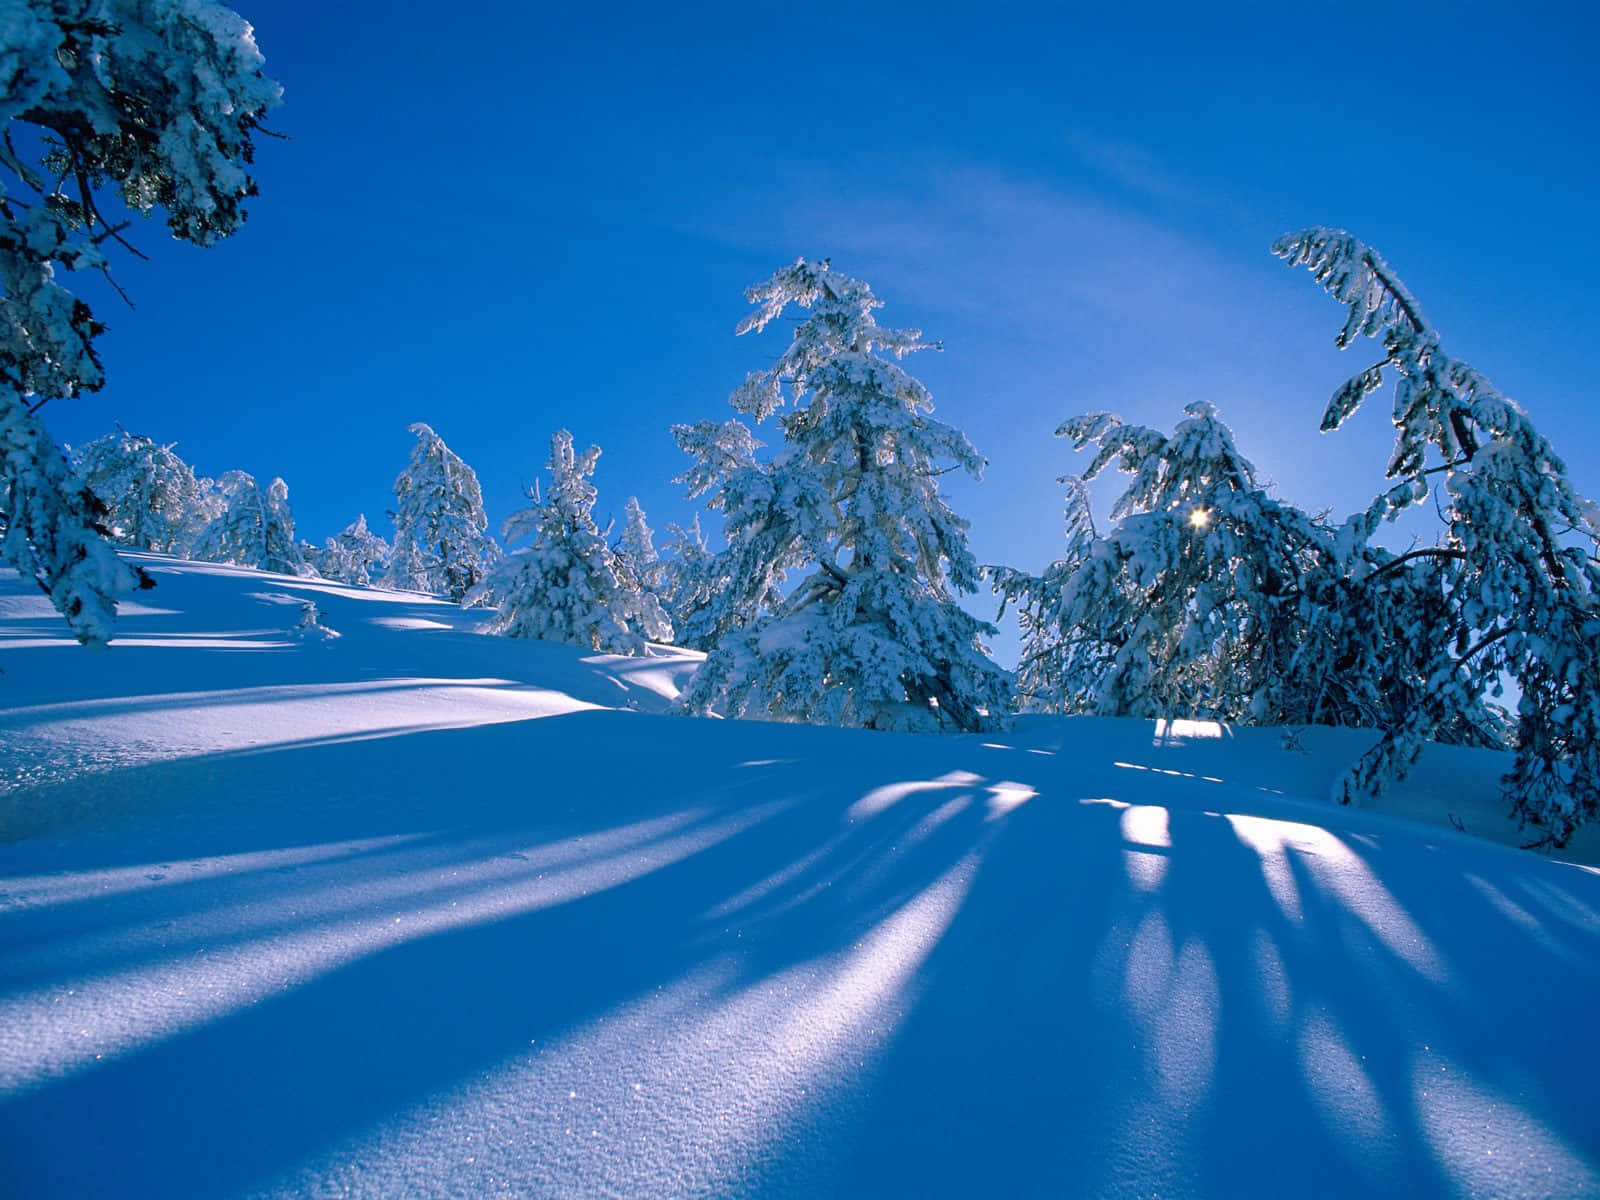 Enjoy the beauty of winter